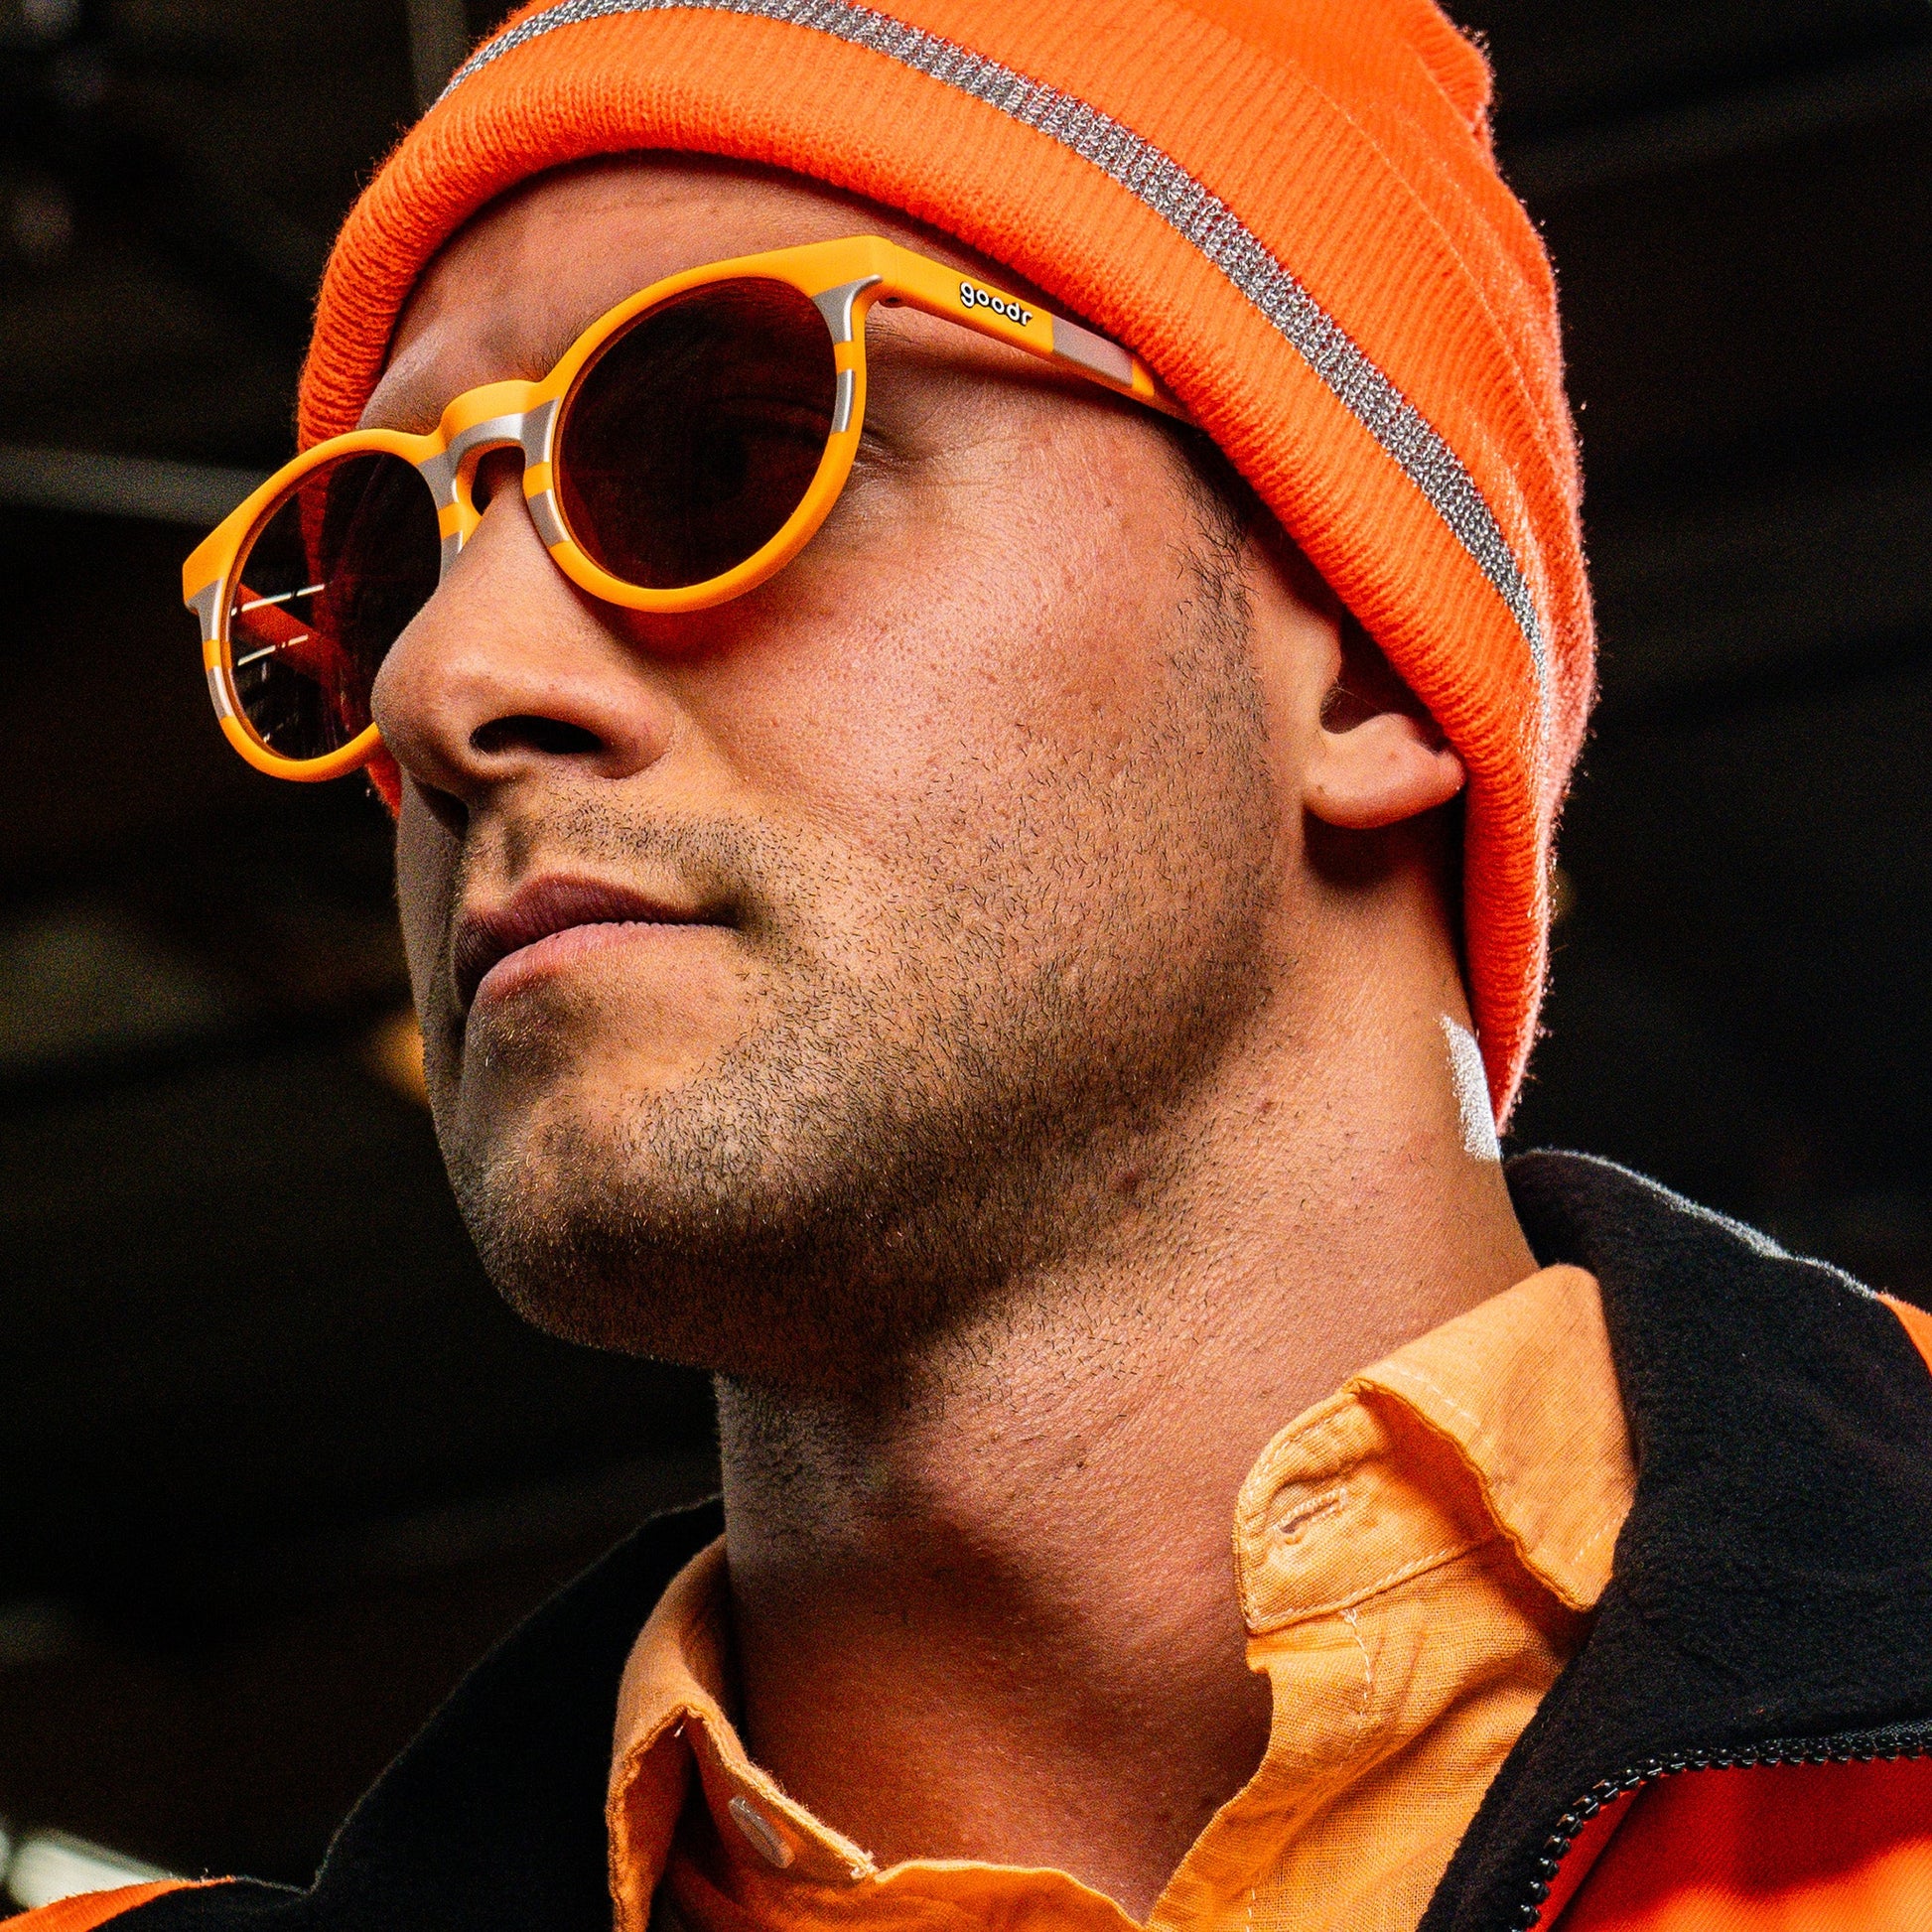 "Face Under Construction” Limited Circle G Polarized Sunglasses Goodr